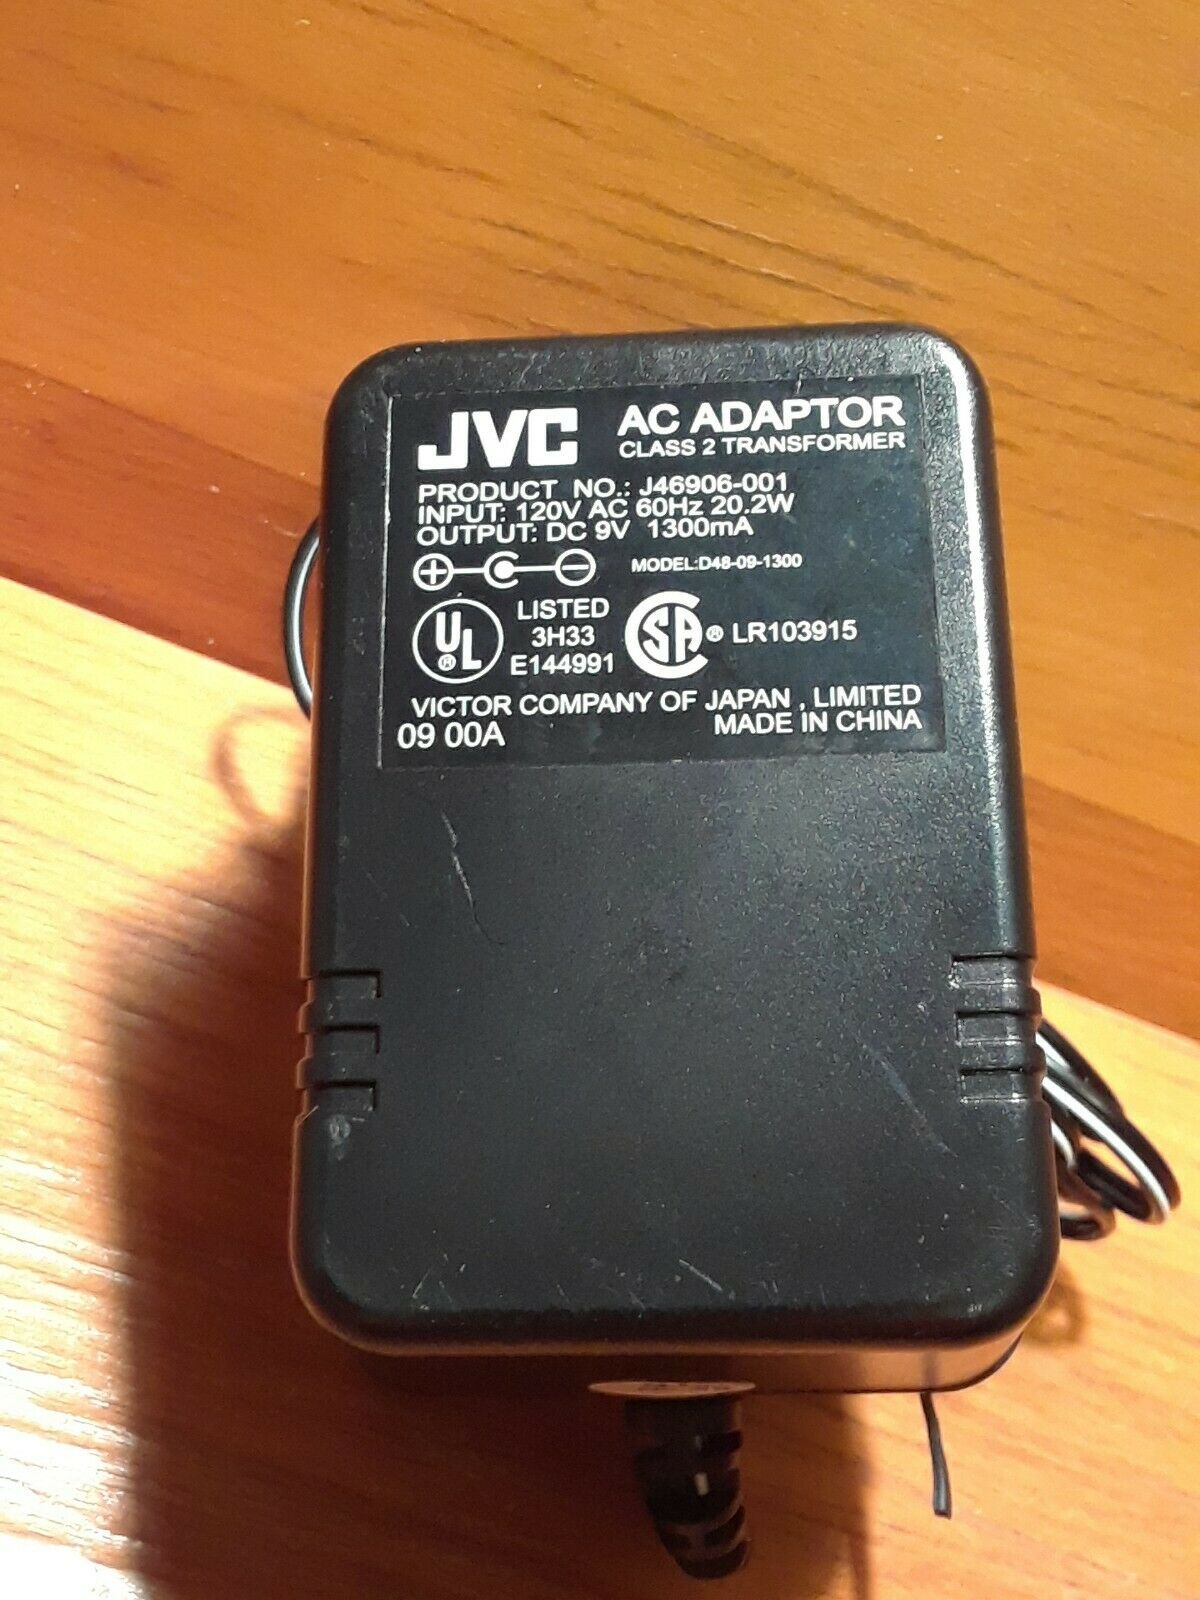 New 9V 1300mA JVC J46906-001 Class 2 Transformer Ac Adapter